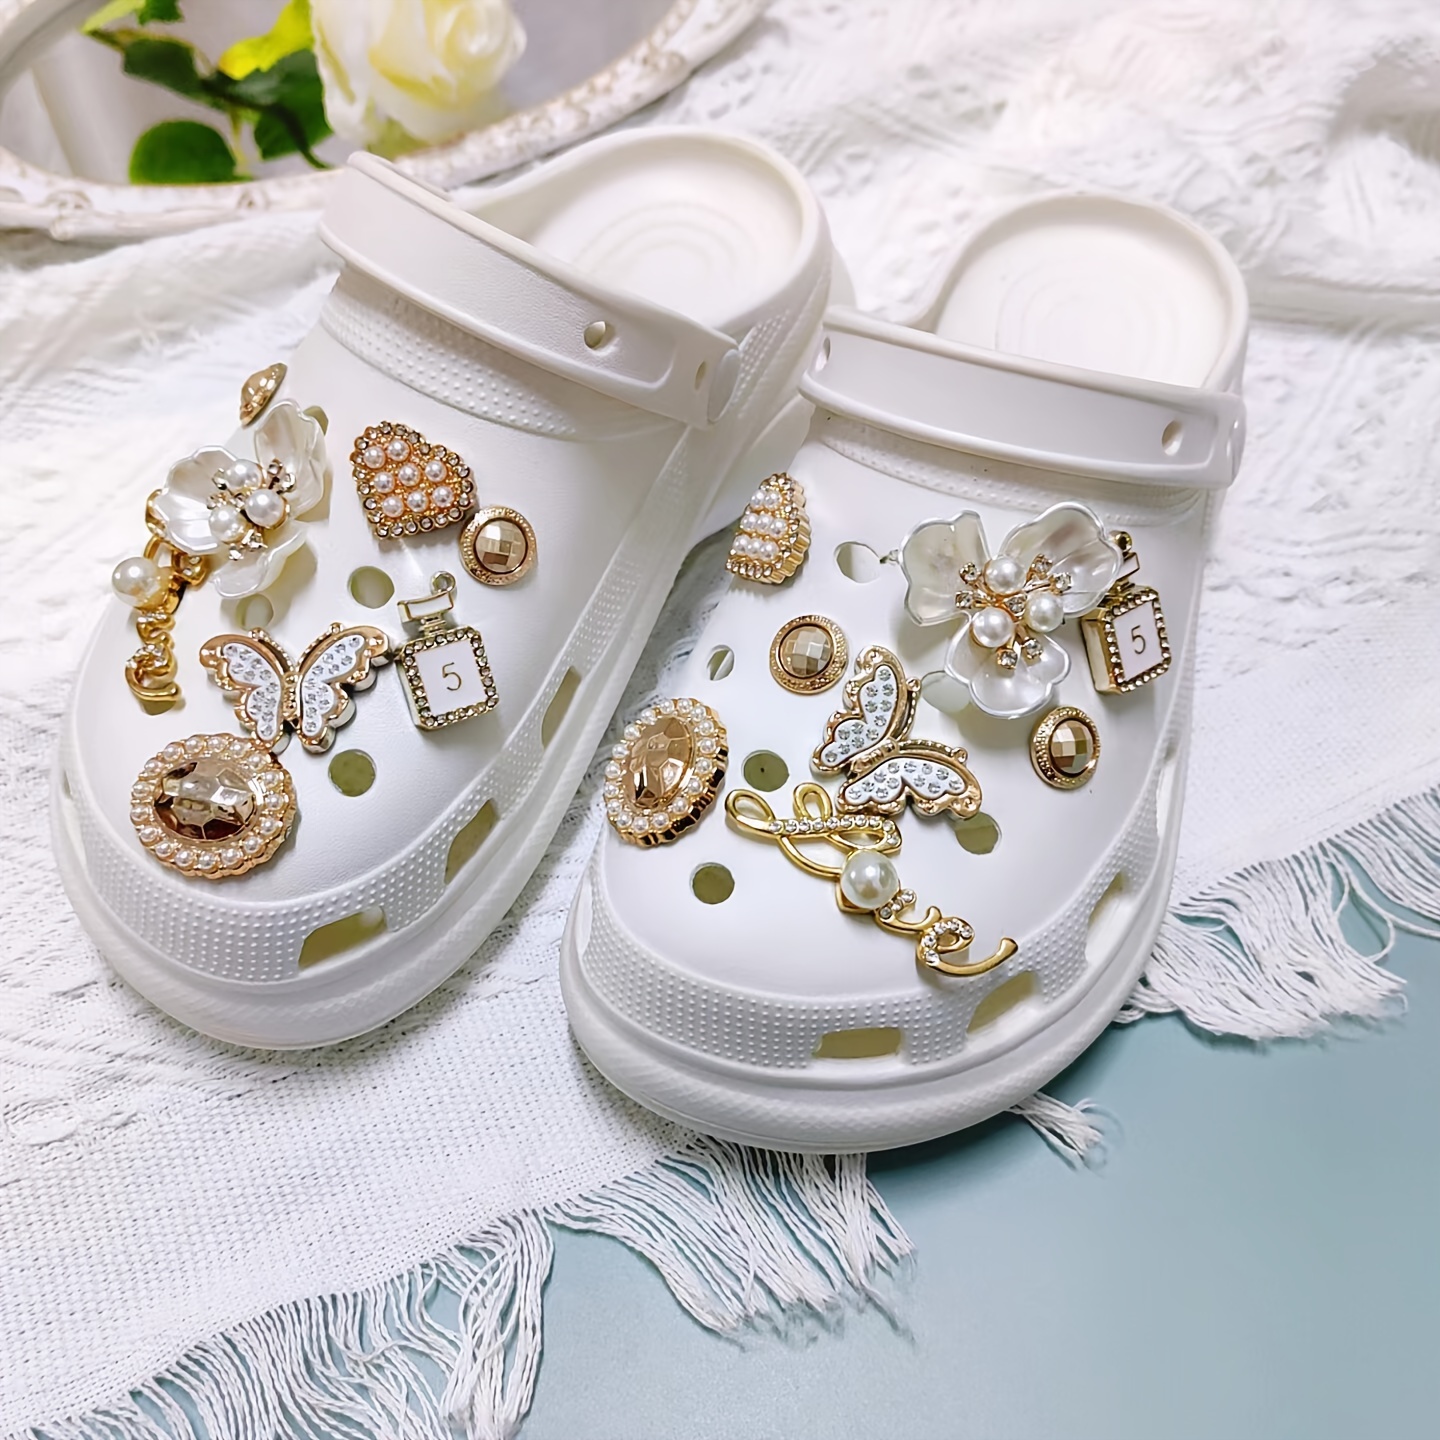 CROCS, Accessories, Piece Crocs Designer Butterfly Flower Perfume Bling  Charms Shoe Decoration